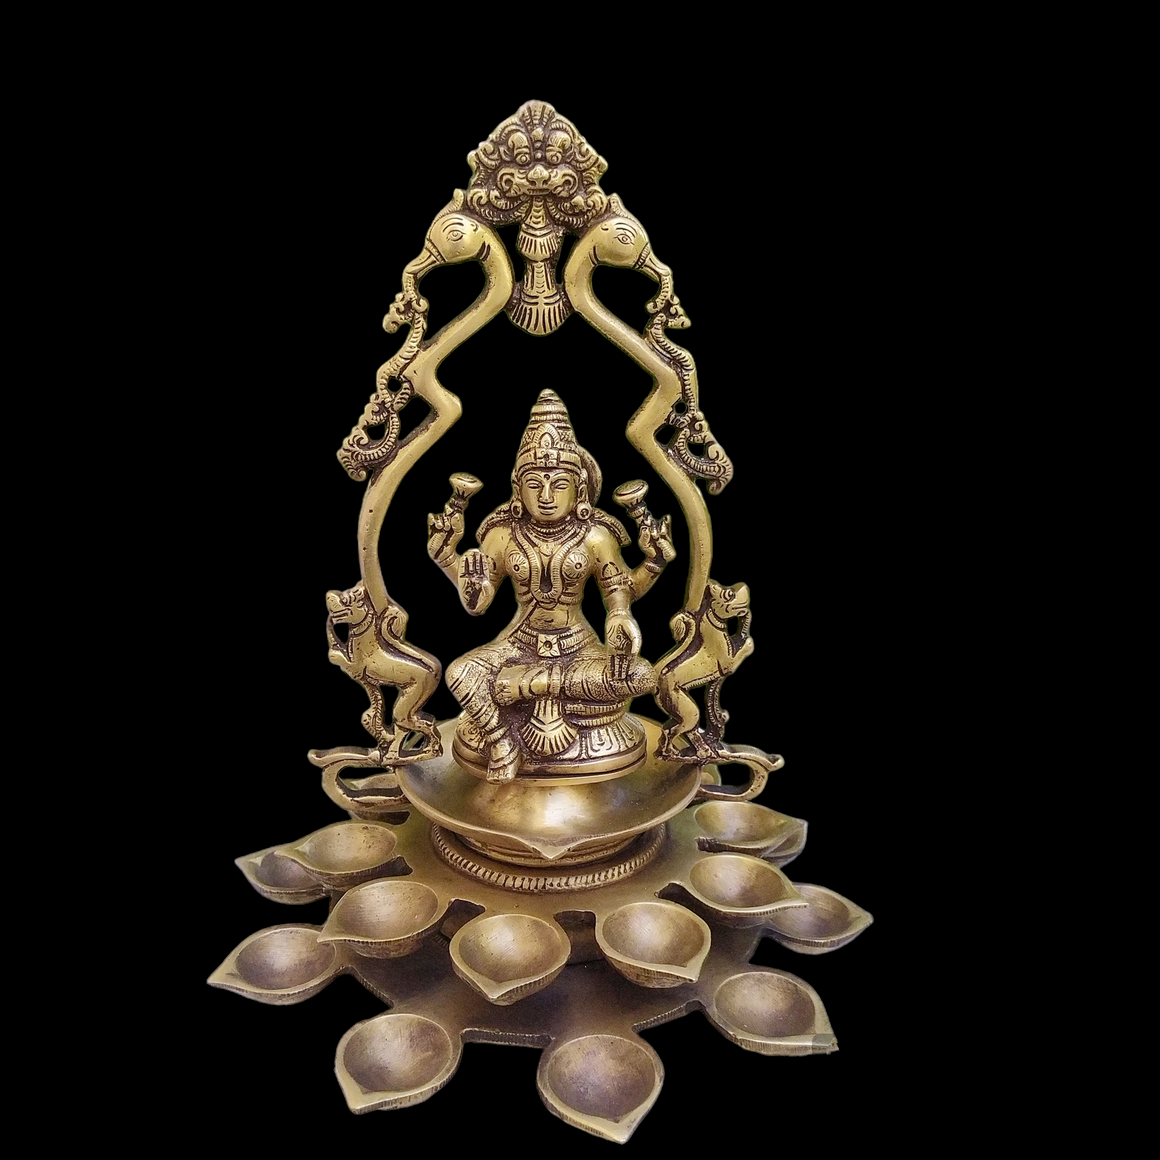 Brass Lamp Of Goddess Lakshmi Seated On A lotus With 20 Diyas. Height 30 cm x Diameter 23 cm